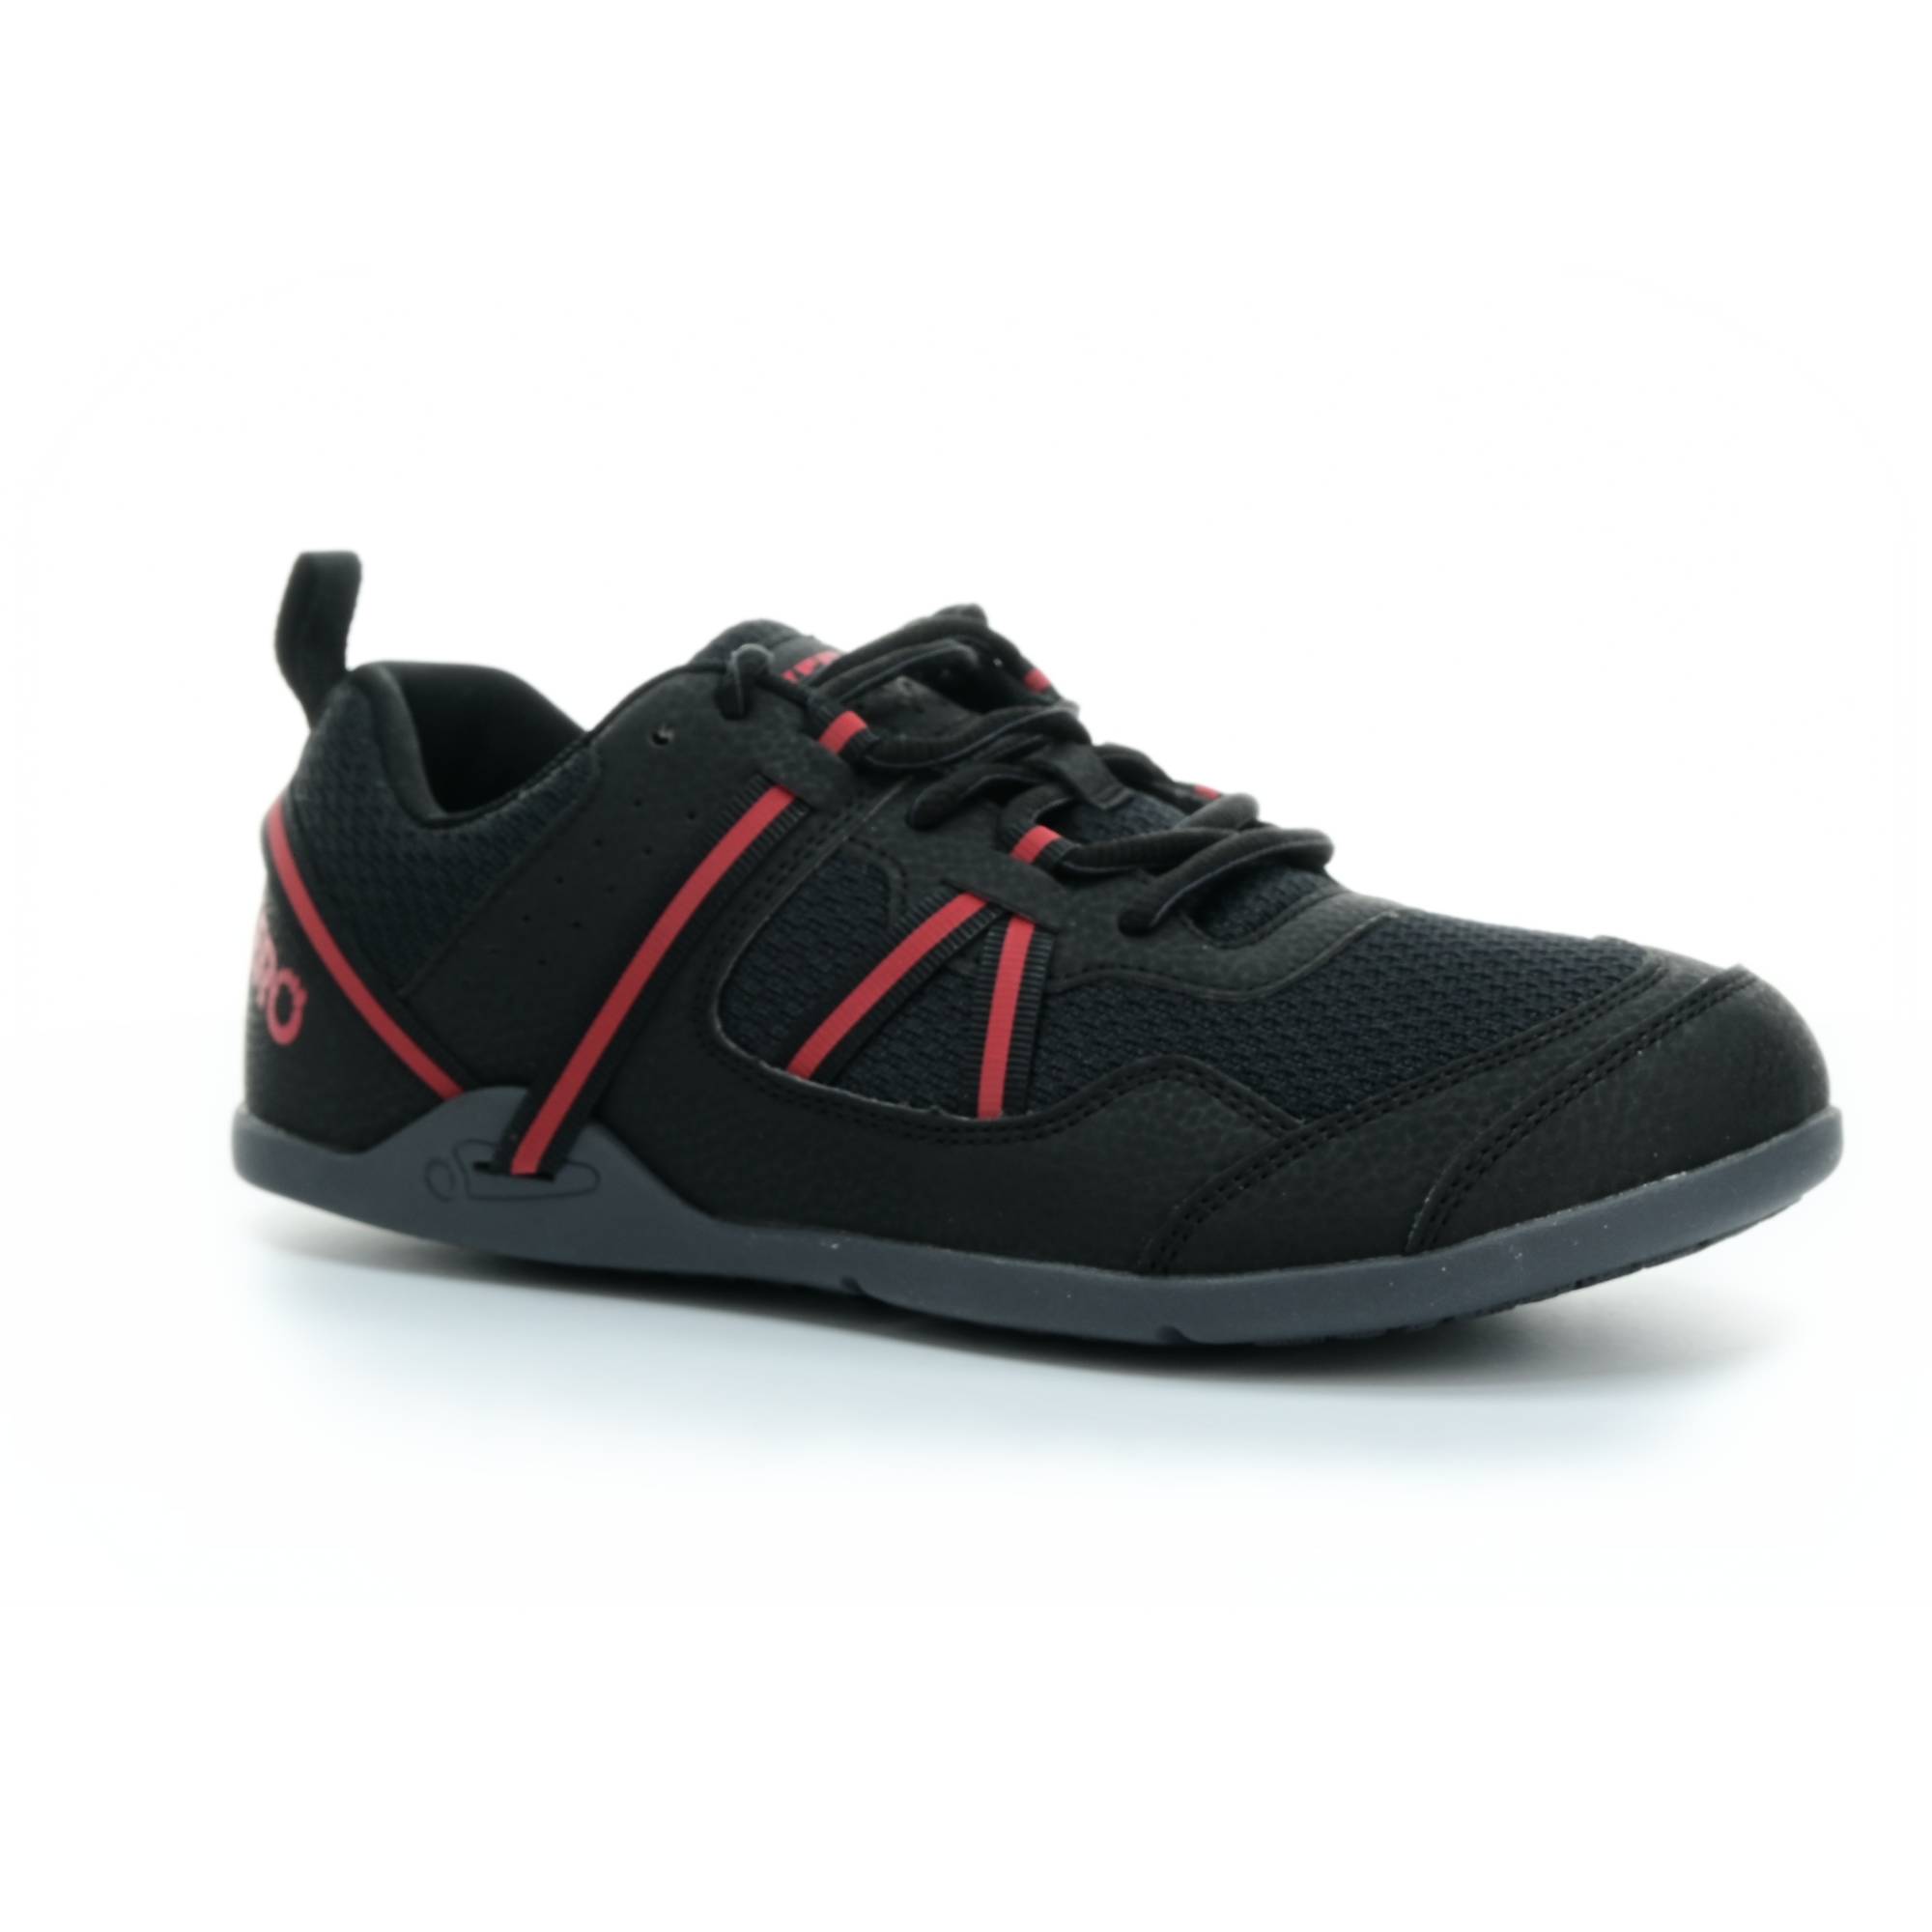 sportovní tenisky Xero shoes Prio Black/Samba Red M 43 EUR